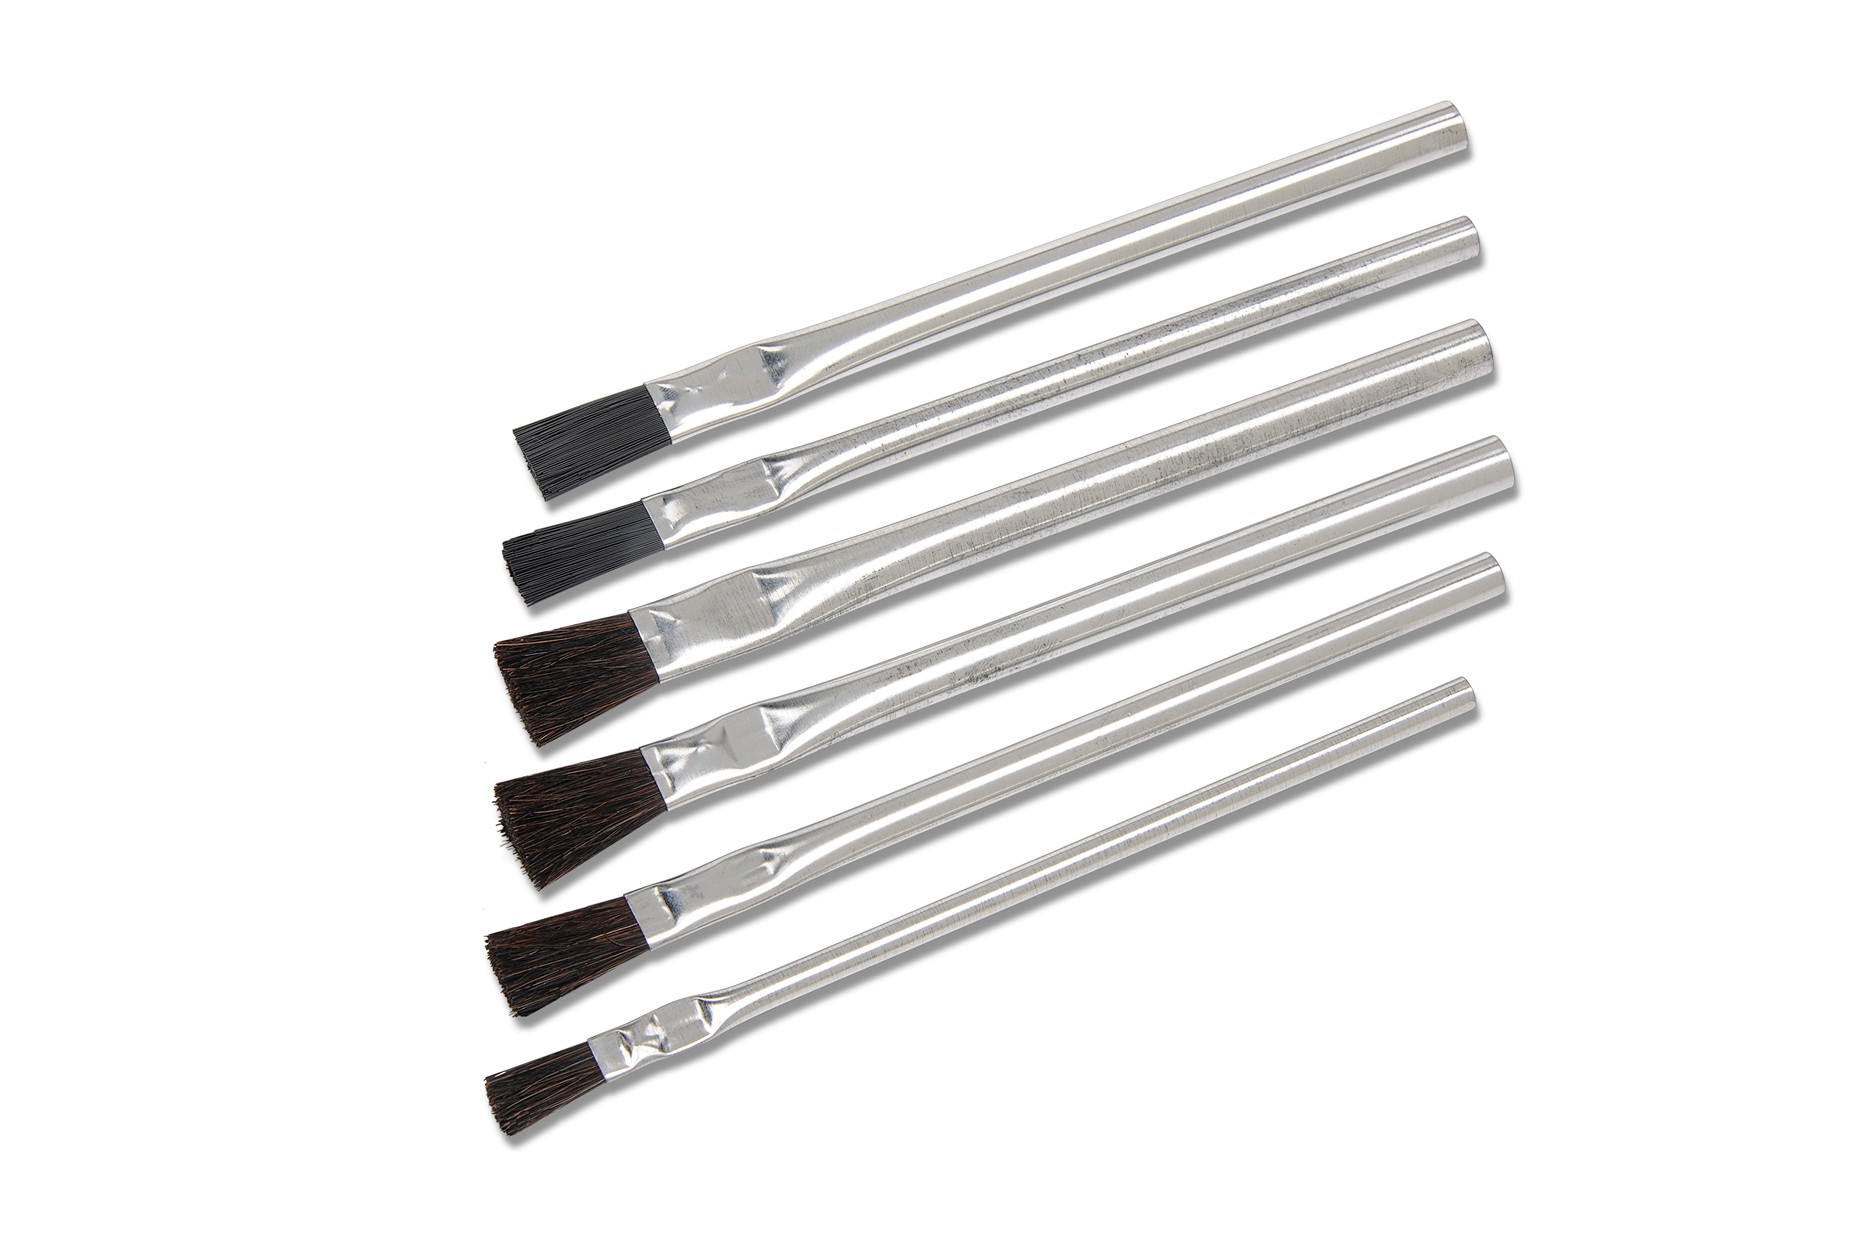 3/8 Diameter Nylon Bristle and Tin Handle Acid Brush AB4N - Gordon Brush